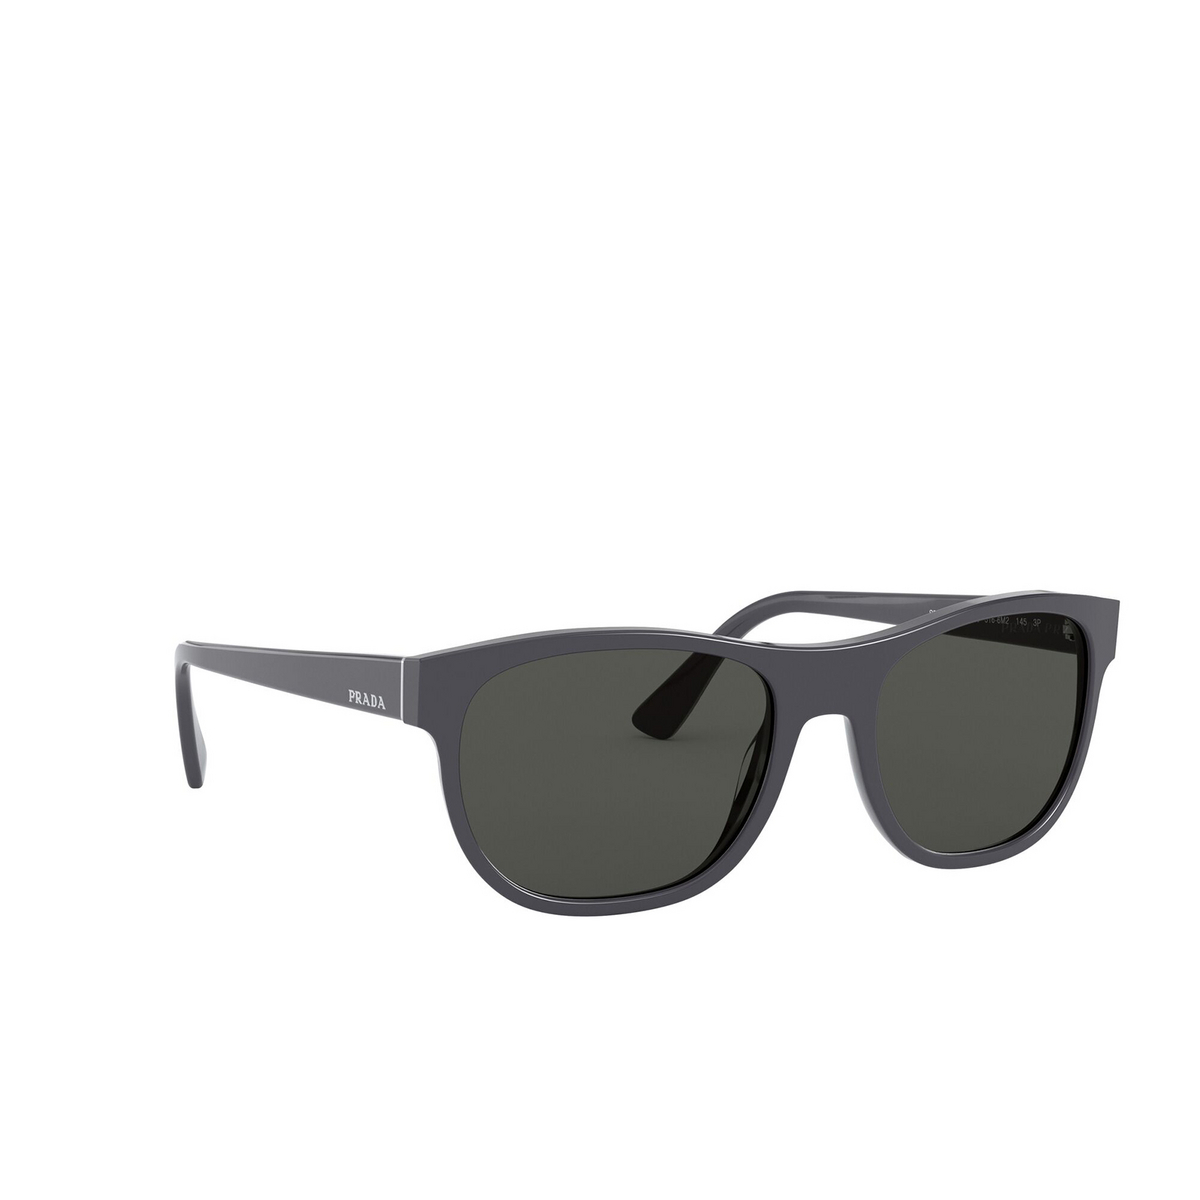 Prada® Square Sunglasses: Heritage PR 04XS color Grey 5166M2 - three-quarters view.